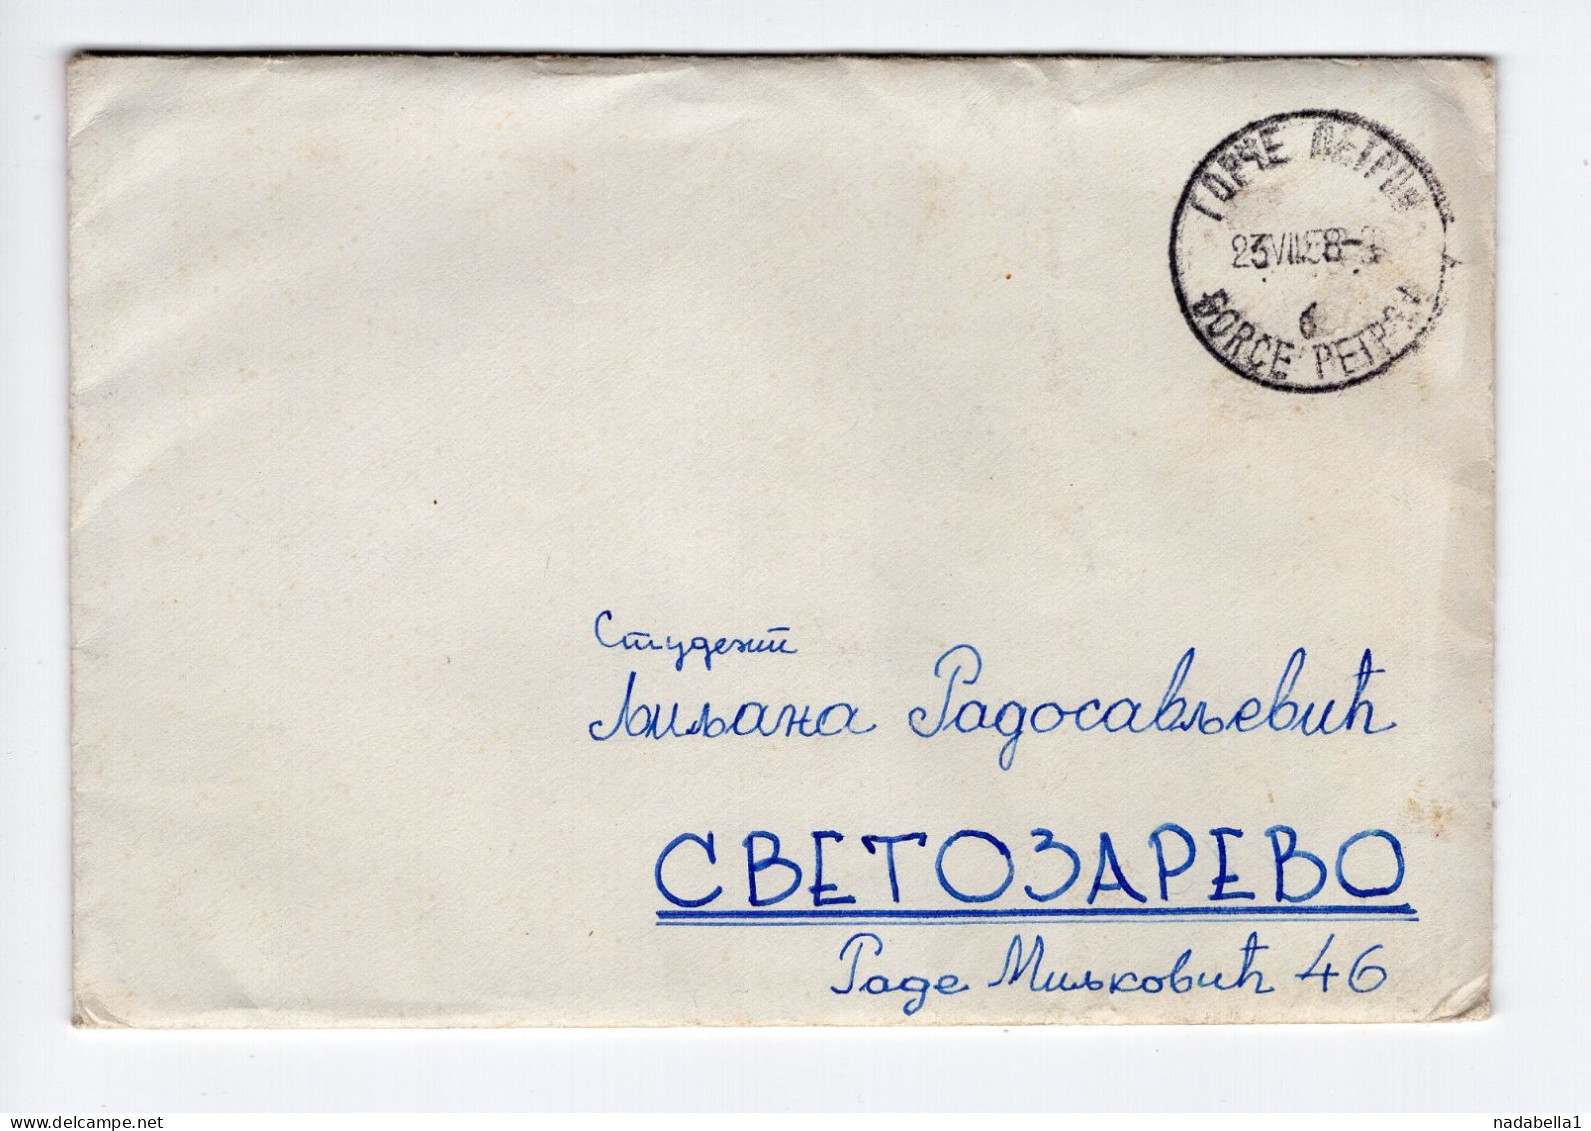 1958. YUGOSLAVIA,MACEDONIA,GORČE PETROV COVER TO SVETOZAREVO,NO STAMP,30 POSTAGE DUE APPLIED - Segnatasse